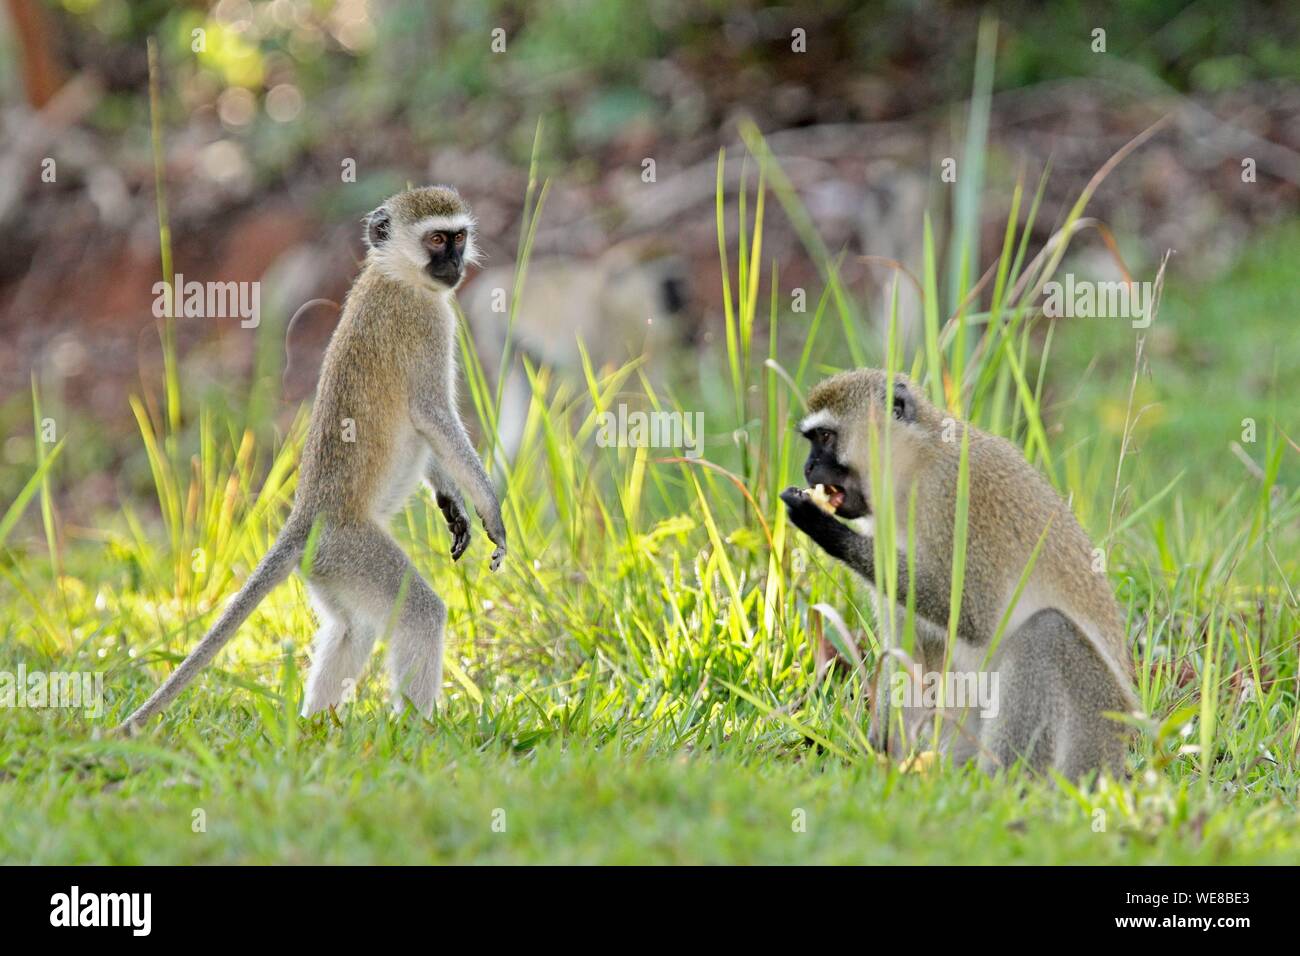 Burundi, Ruvubu National Park, tantalo monkey (Chlorocebus tantalo) Foto Stock